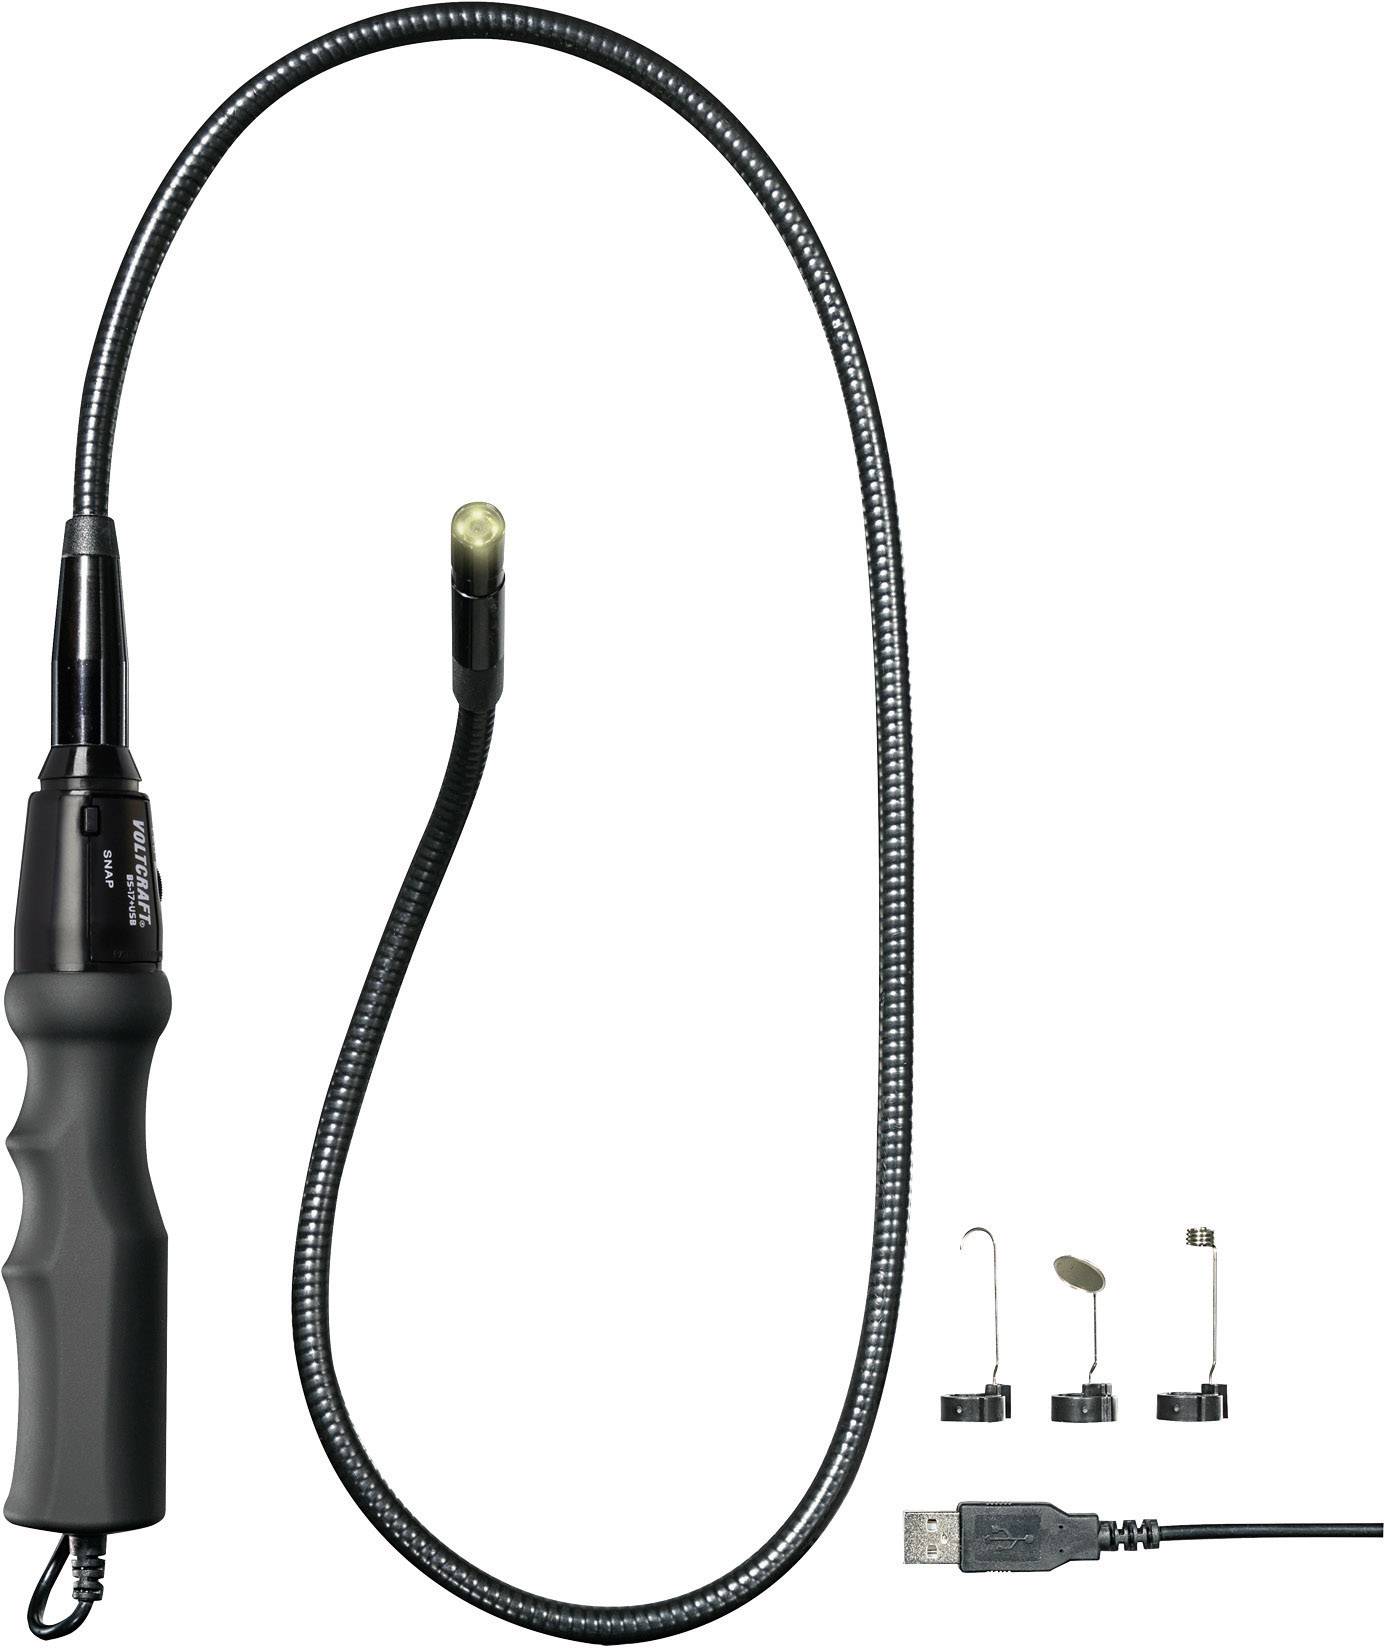 VOLTCRAFT USB-Endoskop VOLTCRAFT BS-17+ Sonden-Ø: 8 mm Sonden-Länge: 93 cm Bild-Funktion, Video-Funk